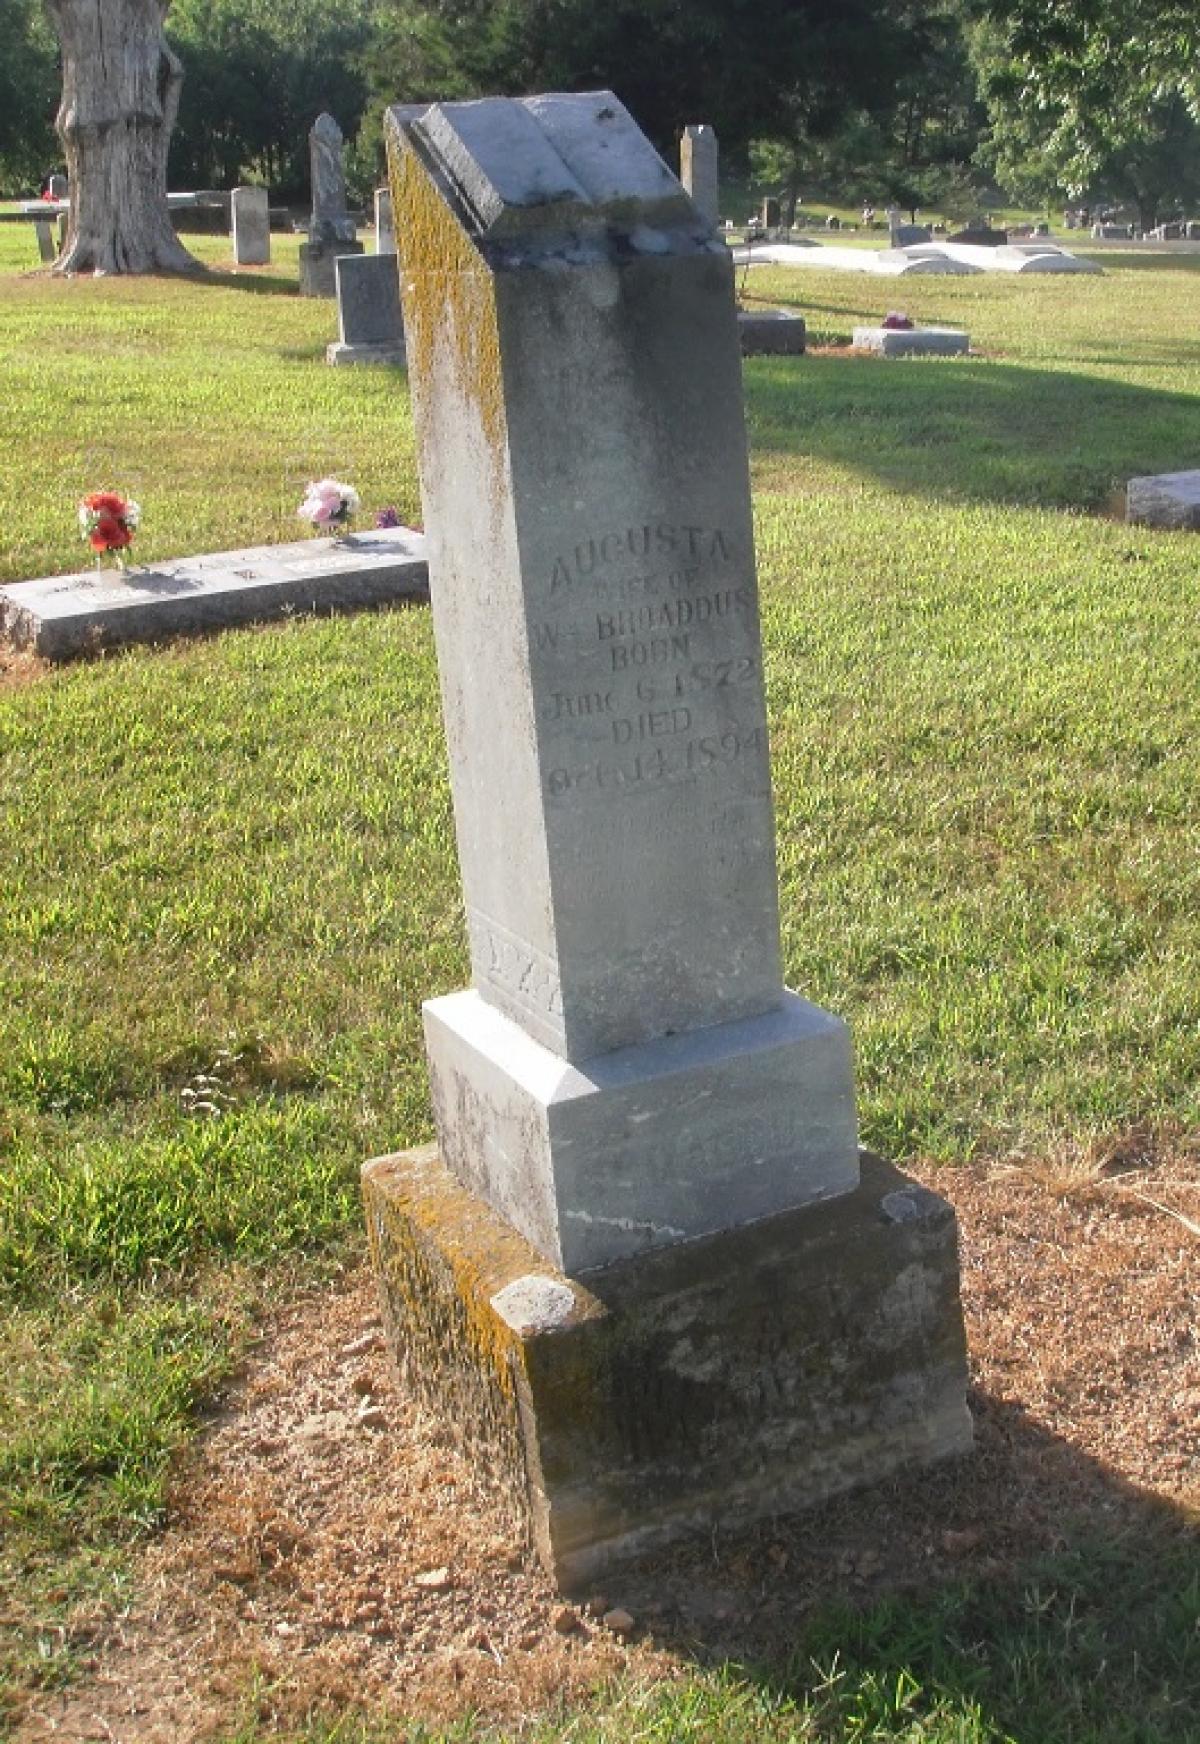 OK, Grove, Olympus Cemetery, Broaddus, Augusta Headstone